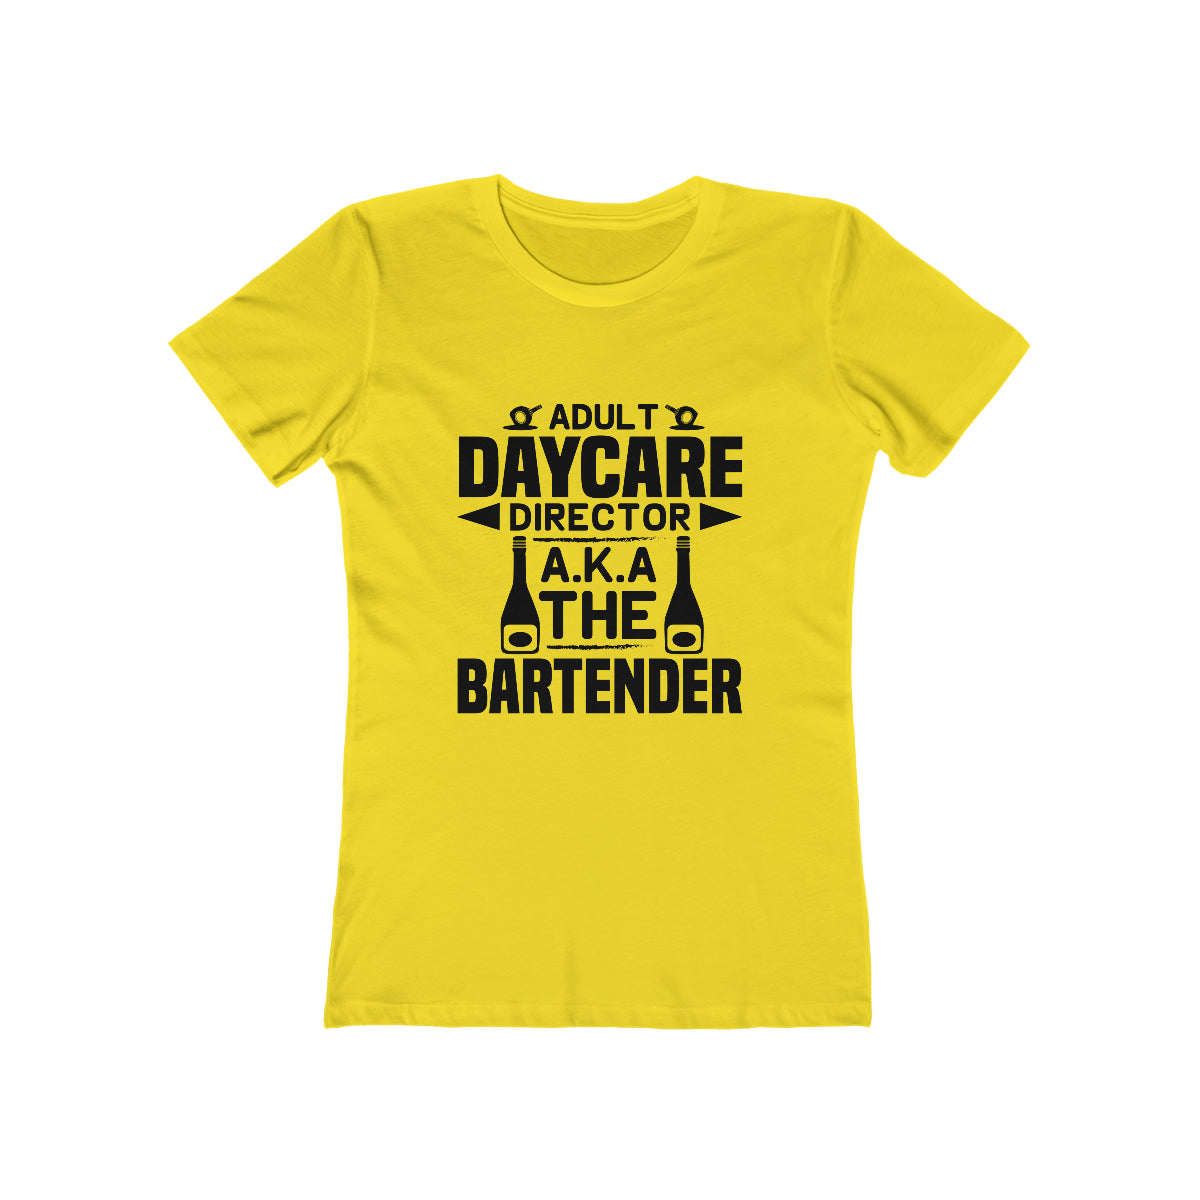 Adult Daycare Director AKA The Bartender - Women's T-shirt